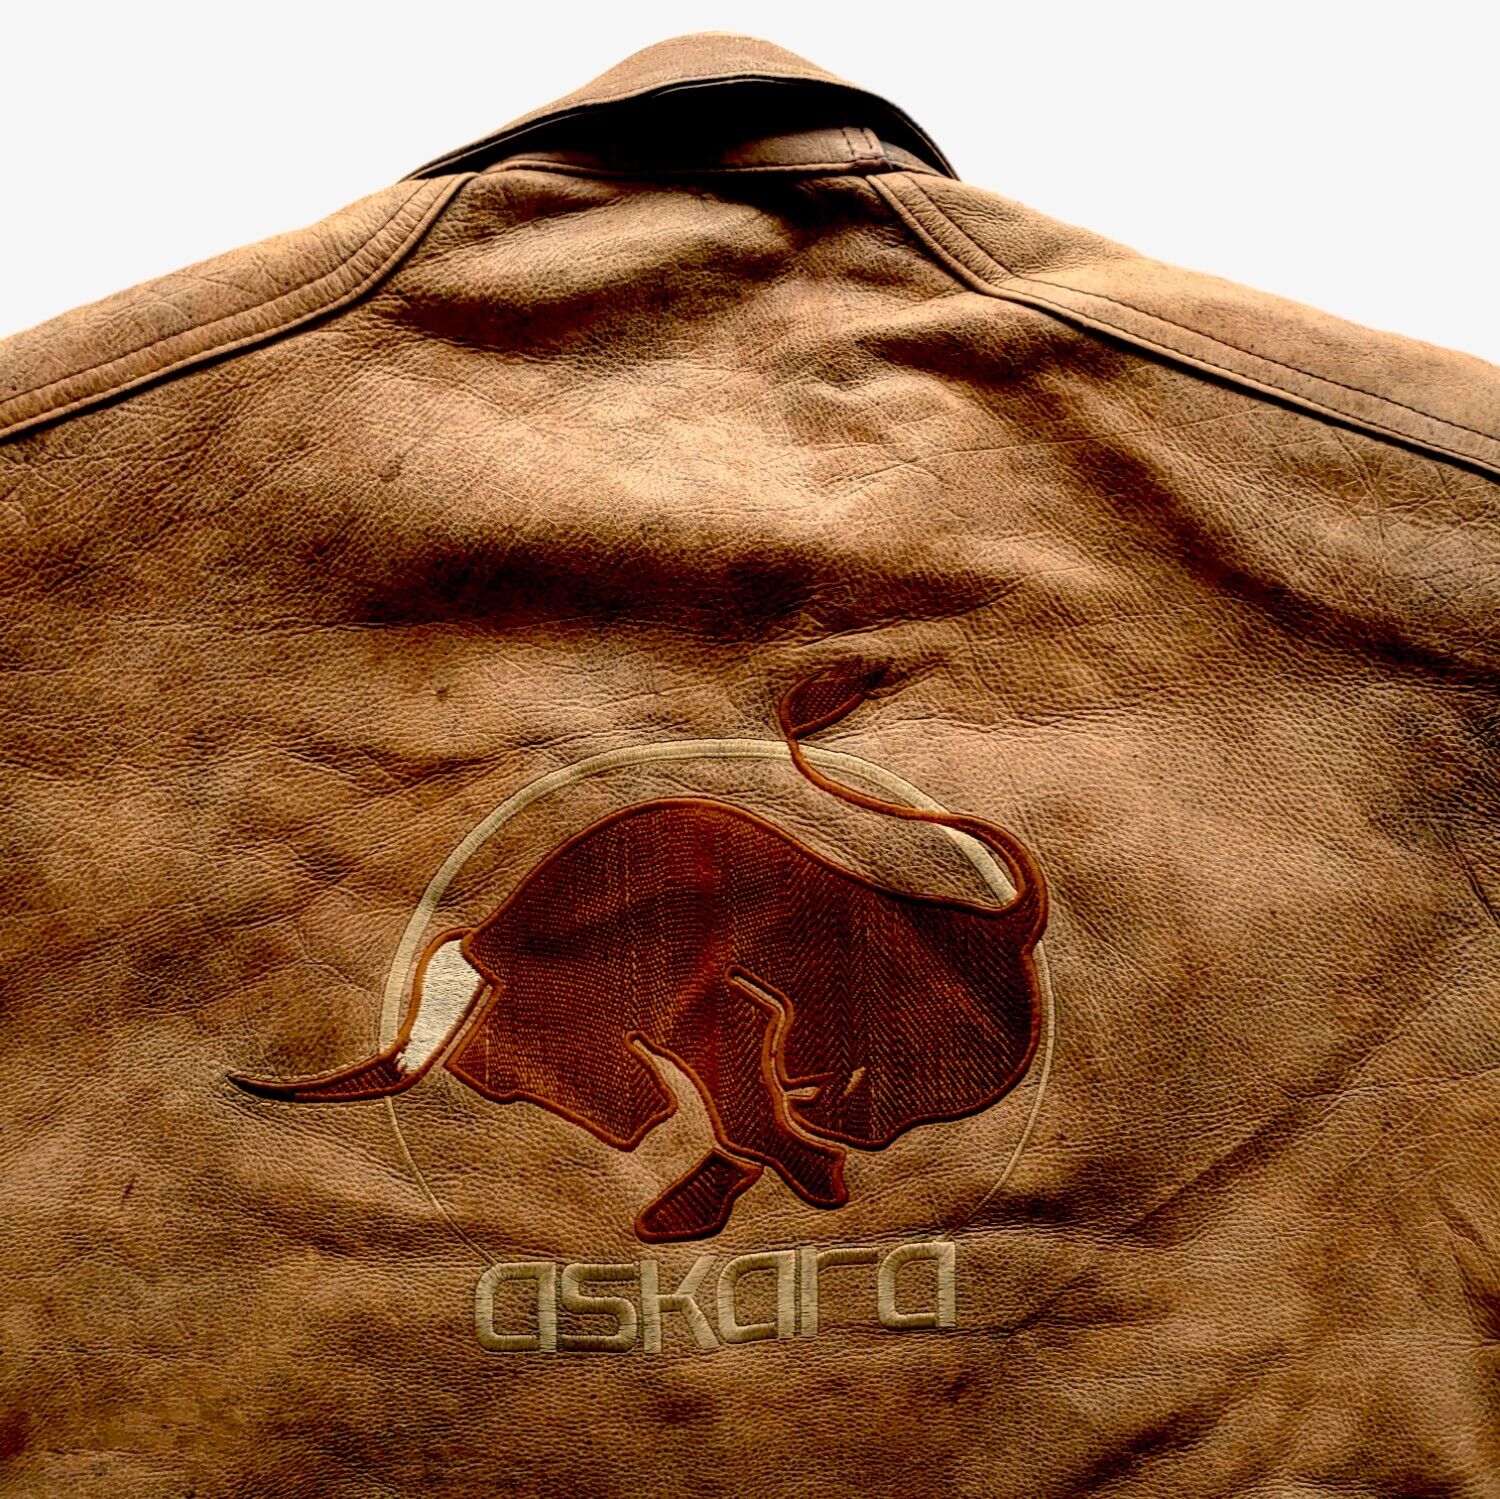 Vintage 1990s Askara Paris Leather Biker Jacket With Big Back Embroidered Bull Motif - Casspios Dream